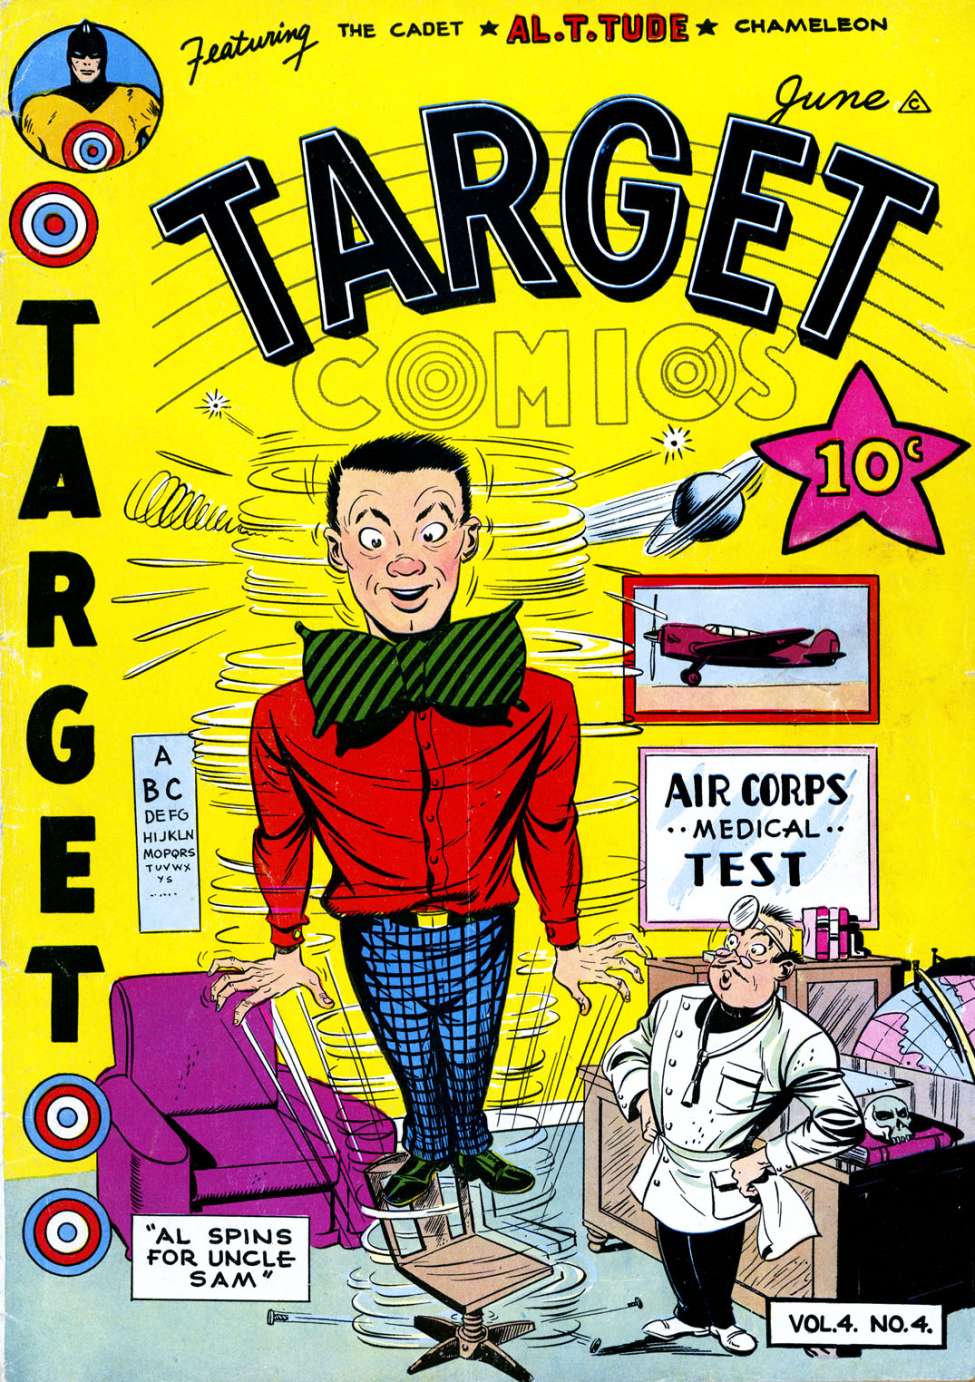 Comic Book Cover For Target Comics v4 4 - Version 2